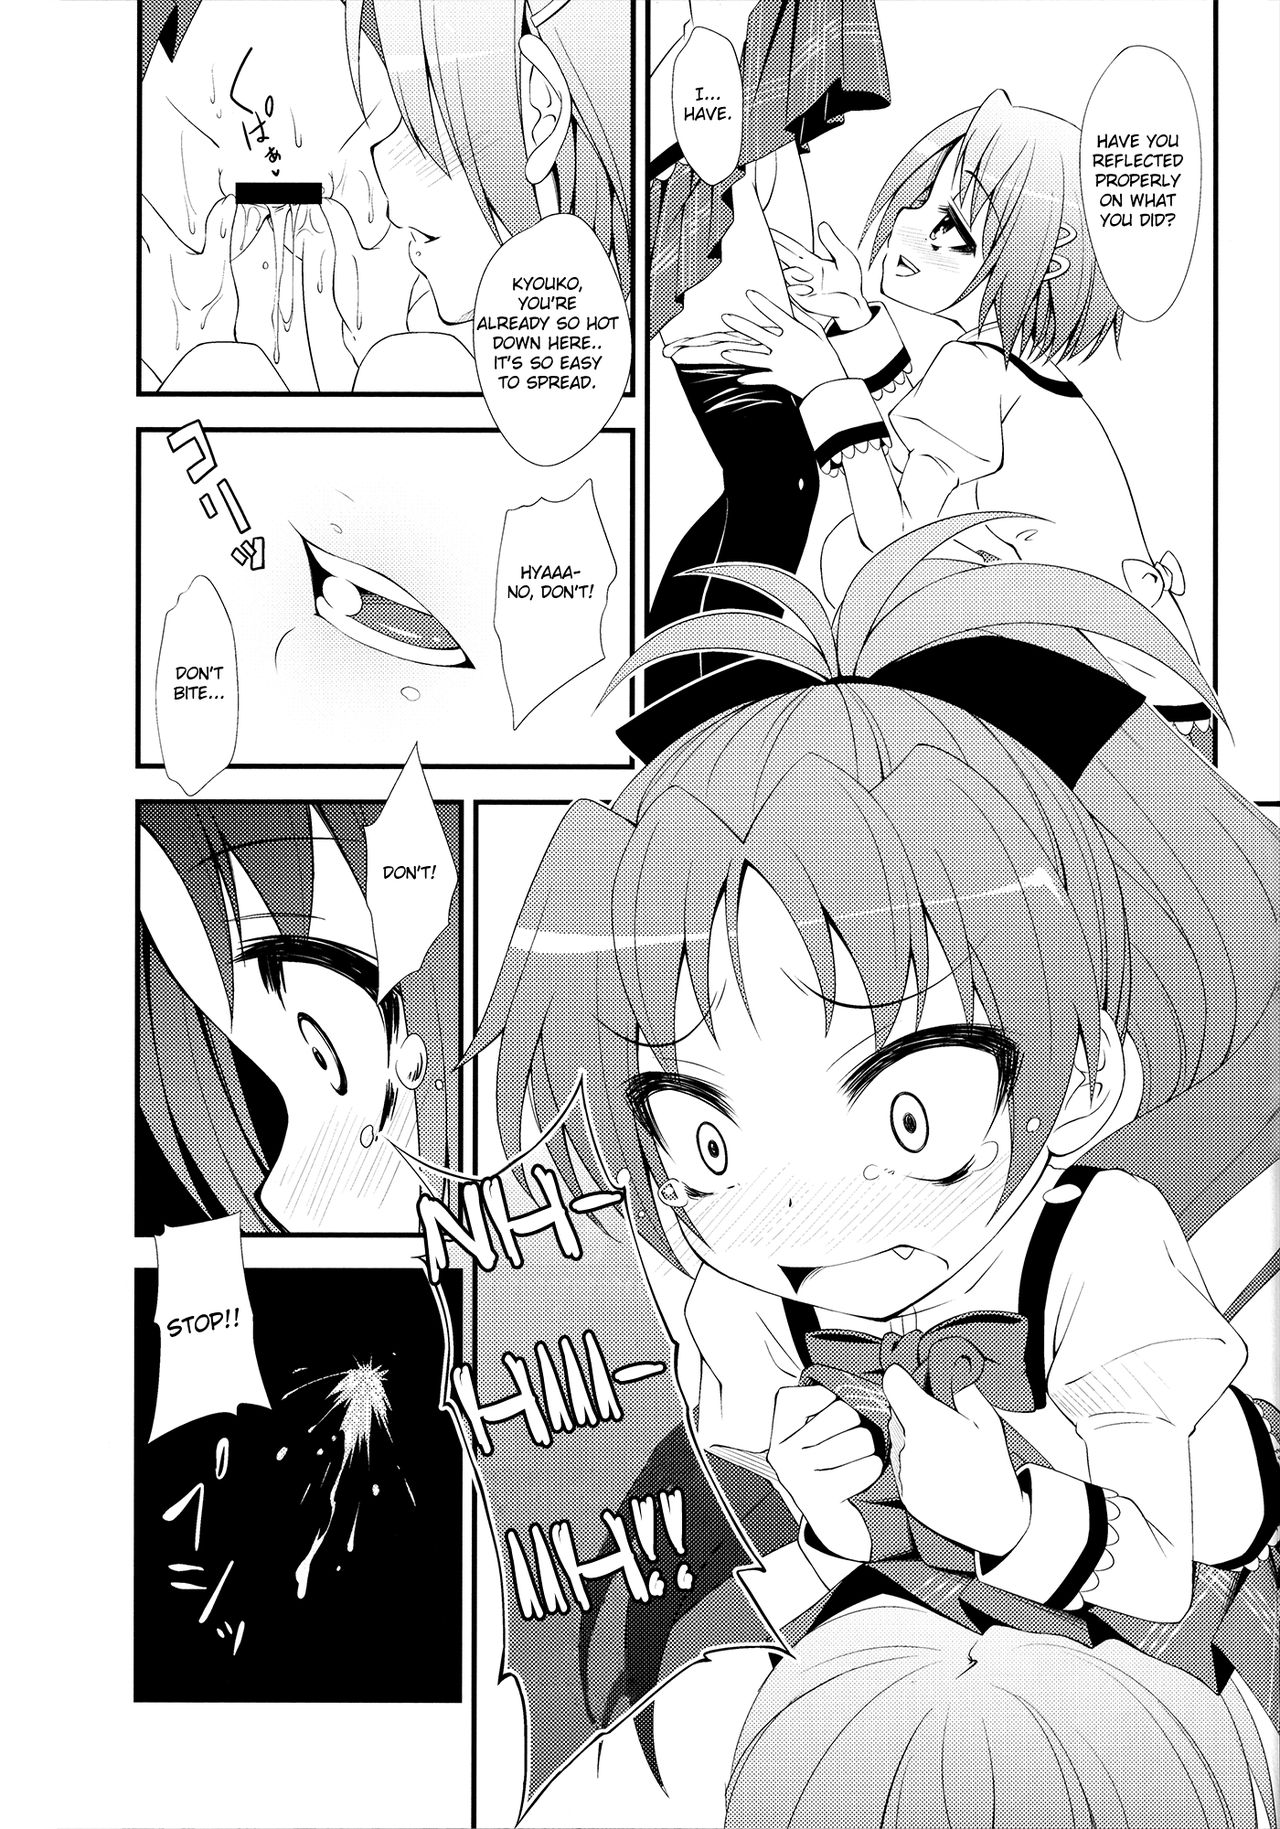 (SC53) [Fukazume Kizoku (Amaro Tamaro)] Lovely Girls' Lily vol.2 (Puella Magi Madoka Magica) [English] (サンクリ53) [深爪貴族 (あまろたまろ)] Lovely Girls' Lily vol.2 (魔法少女まどか☆マギカ) [英訳]